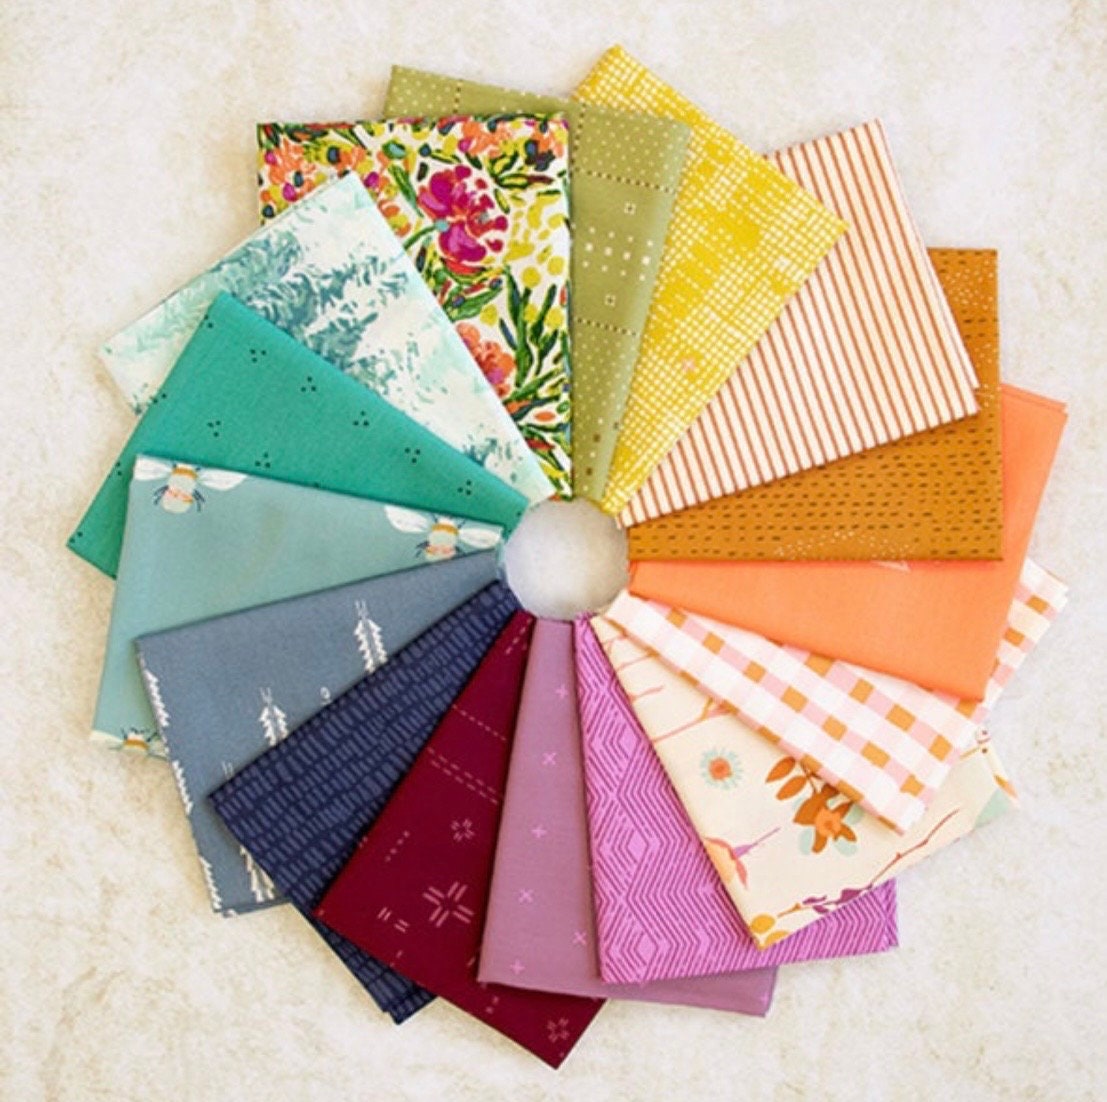 Glowing Quilt Fabric Bundle – Little Fabric Shop